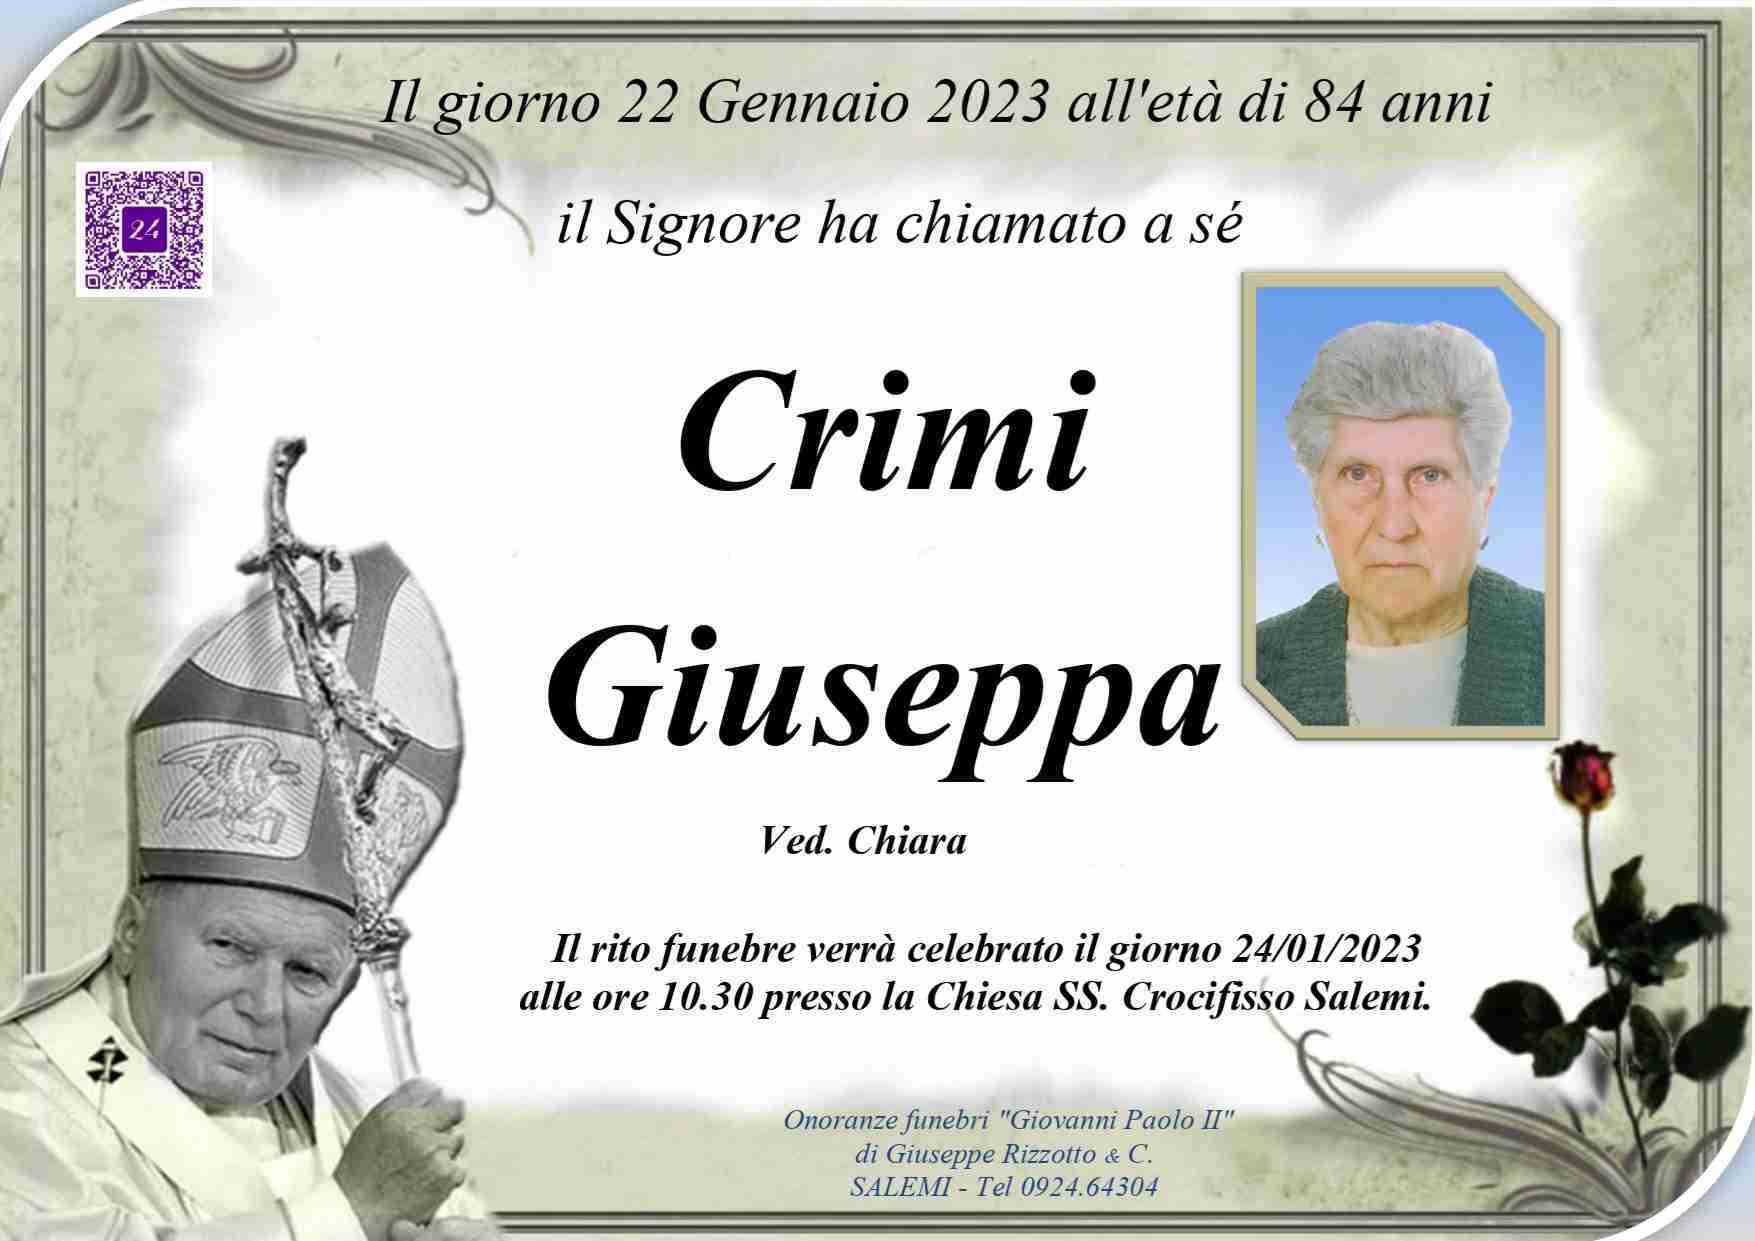 Crimi Giuseppa